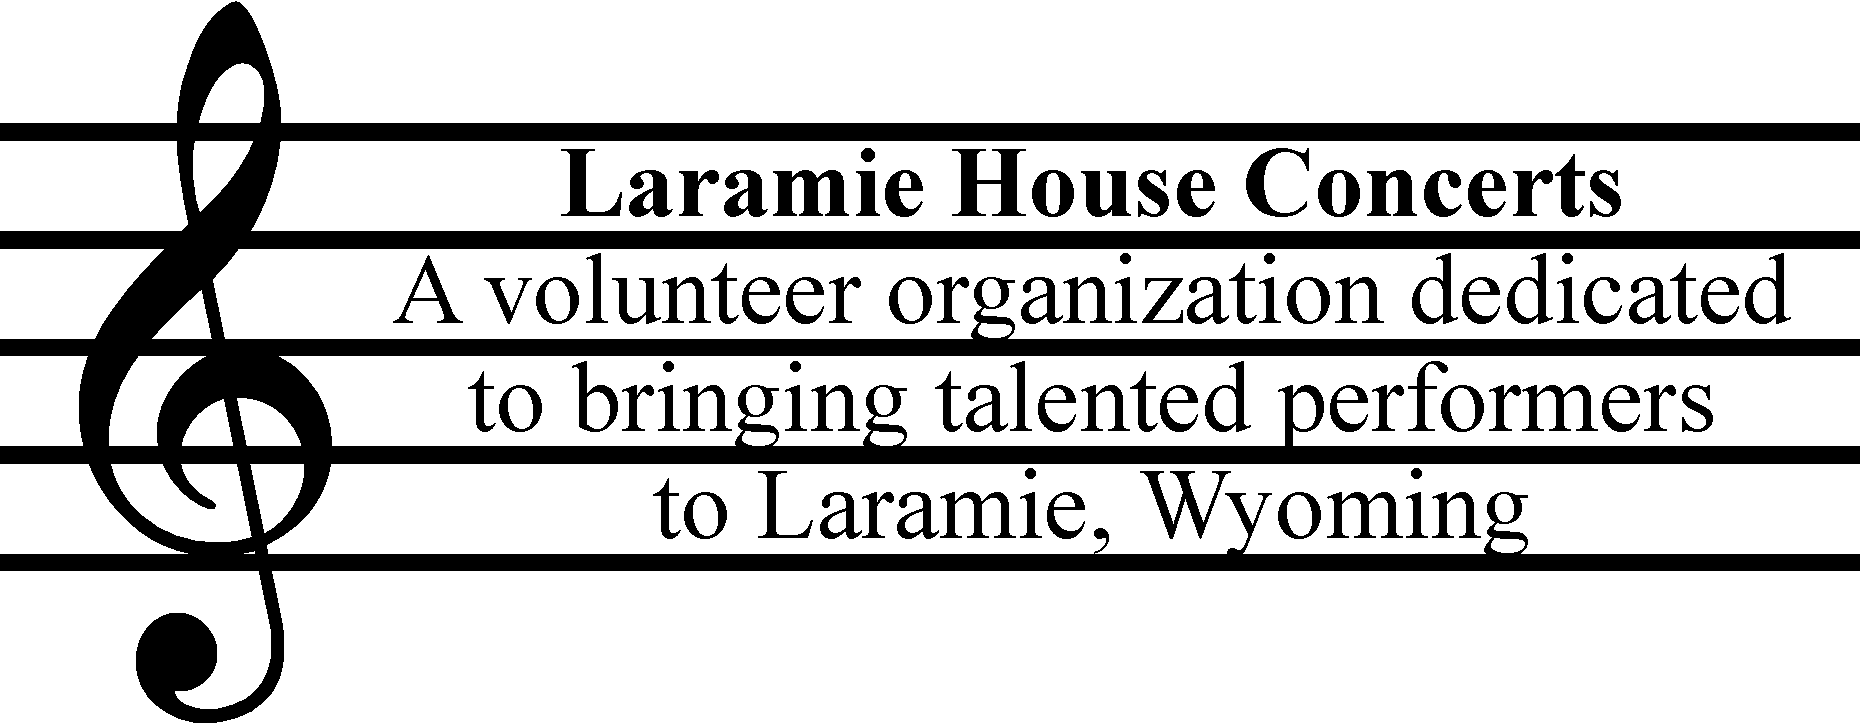 Laramie House Concerts - A volunteer organization dedicated to bringing talented performers to Laramie, Wyoming